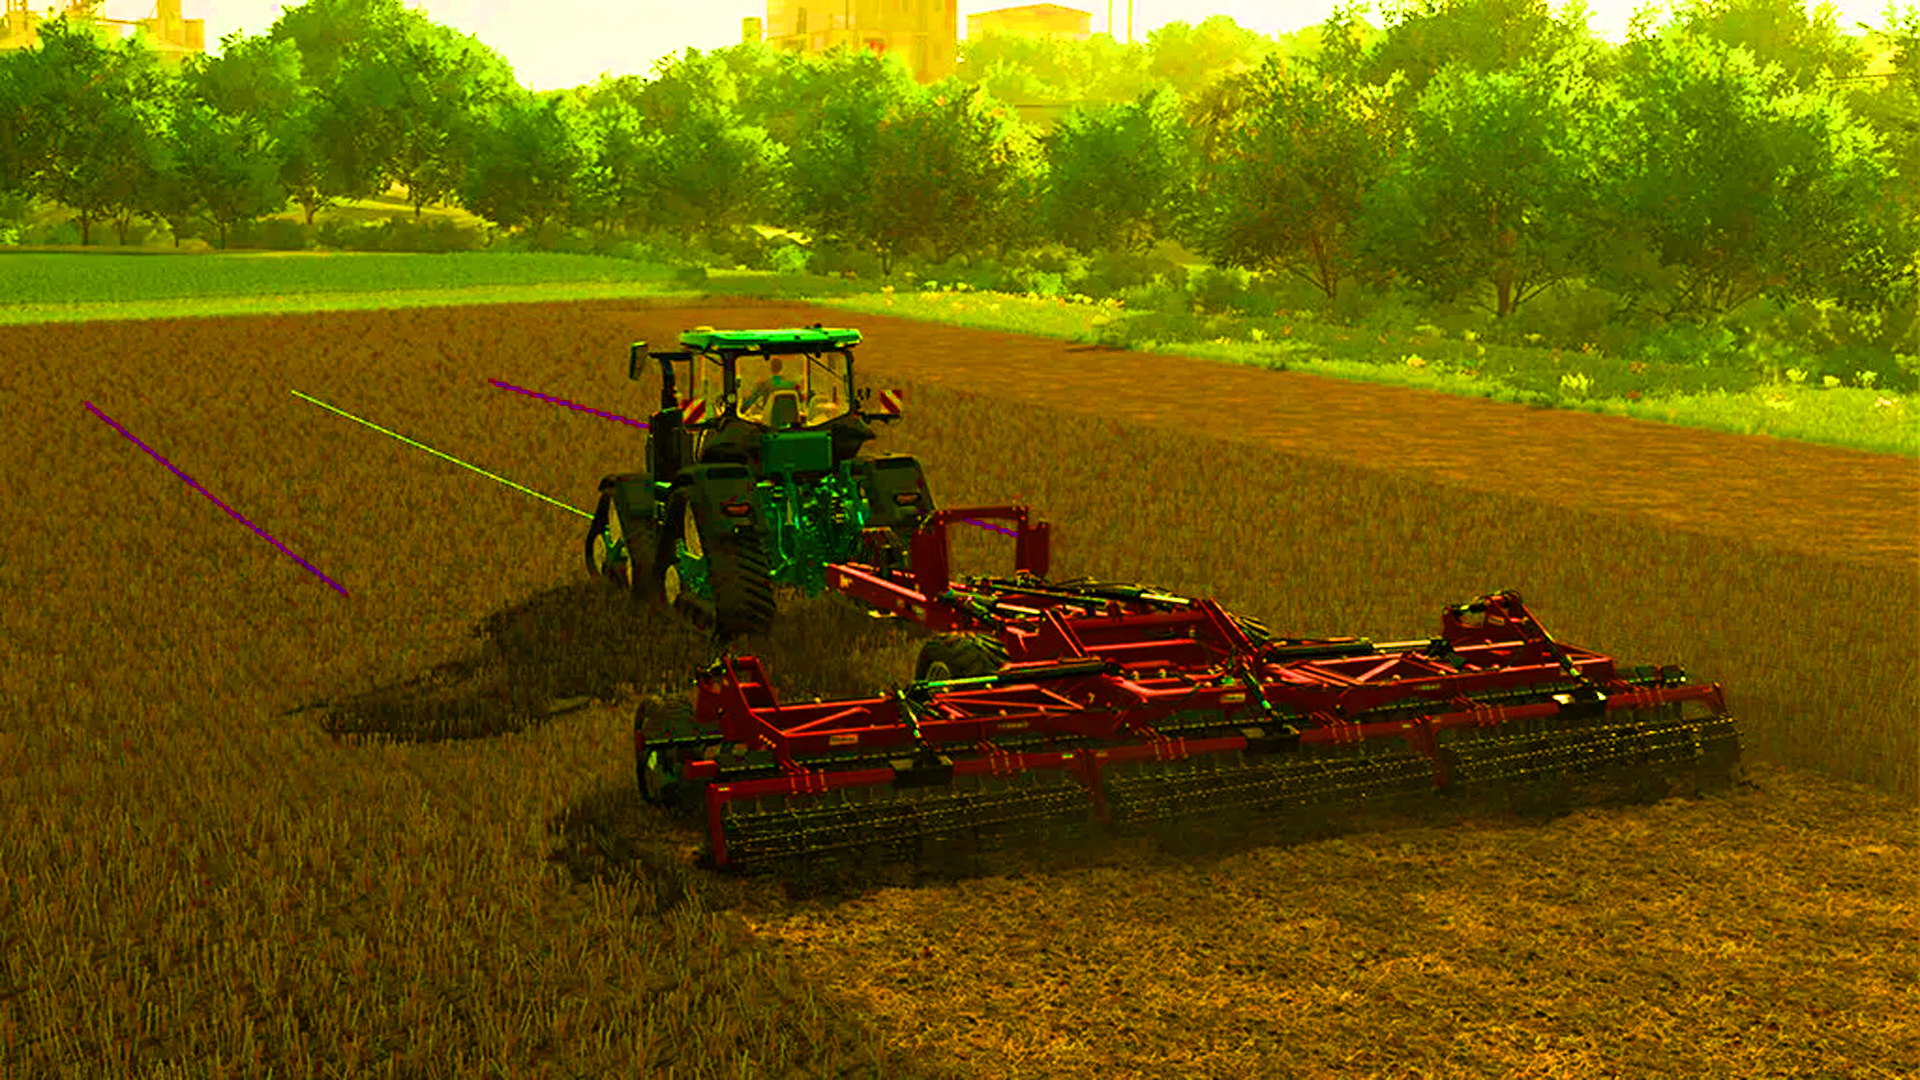 Download do APK de Farmer Simulator Tractor 2022 para Android